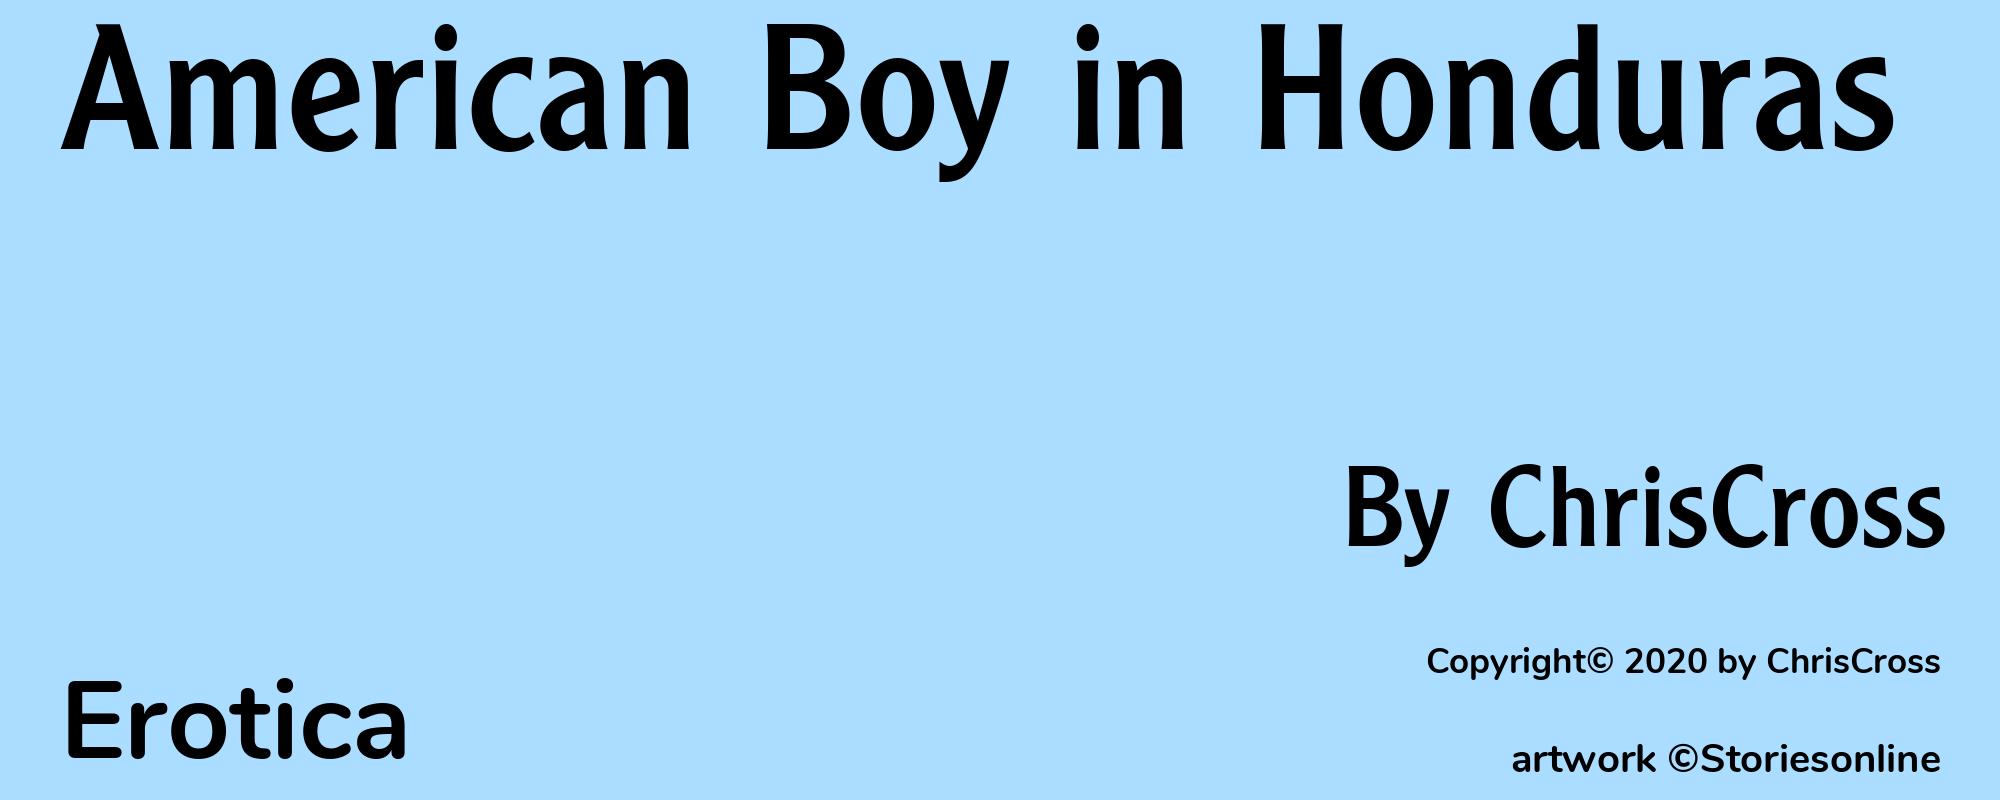 American Boy in Honduras - Cover